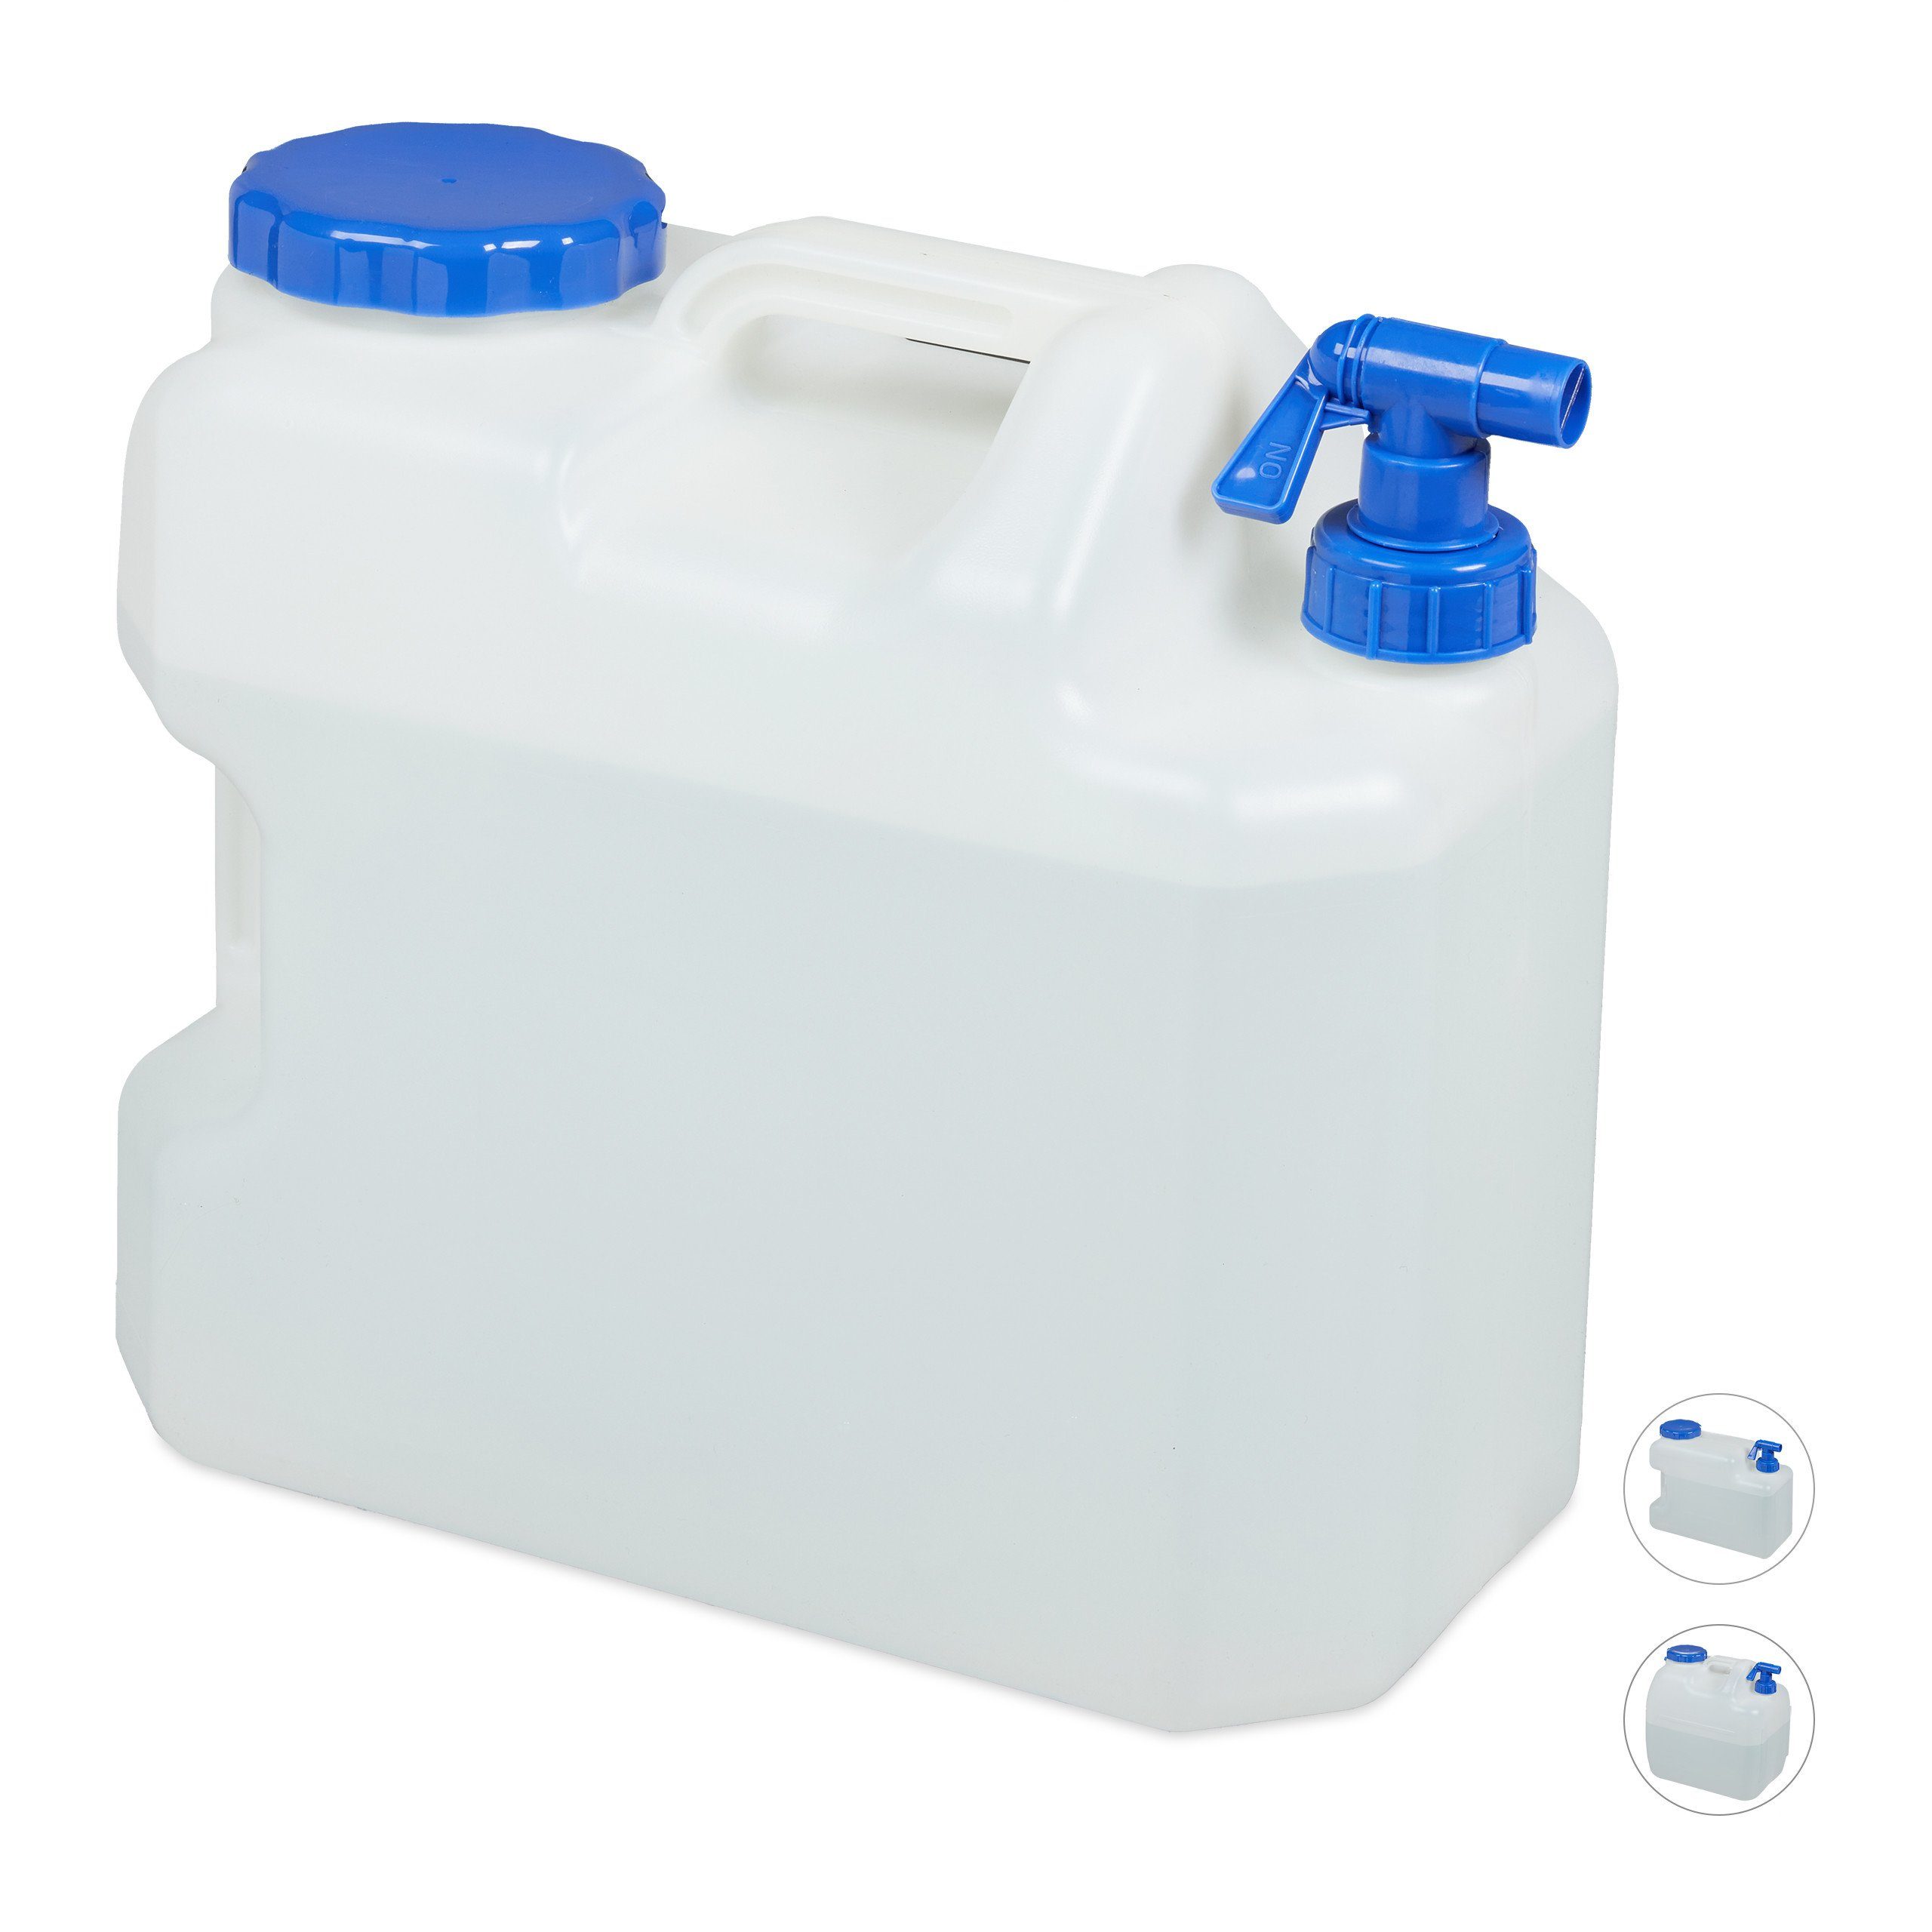 Liter Kanister 18 mit relaxdays Wasserkanister Hahn,